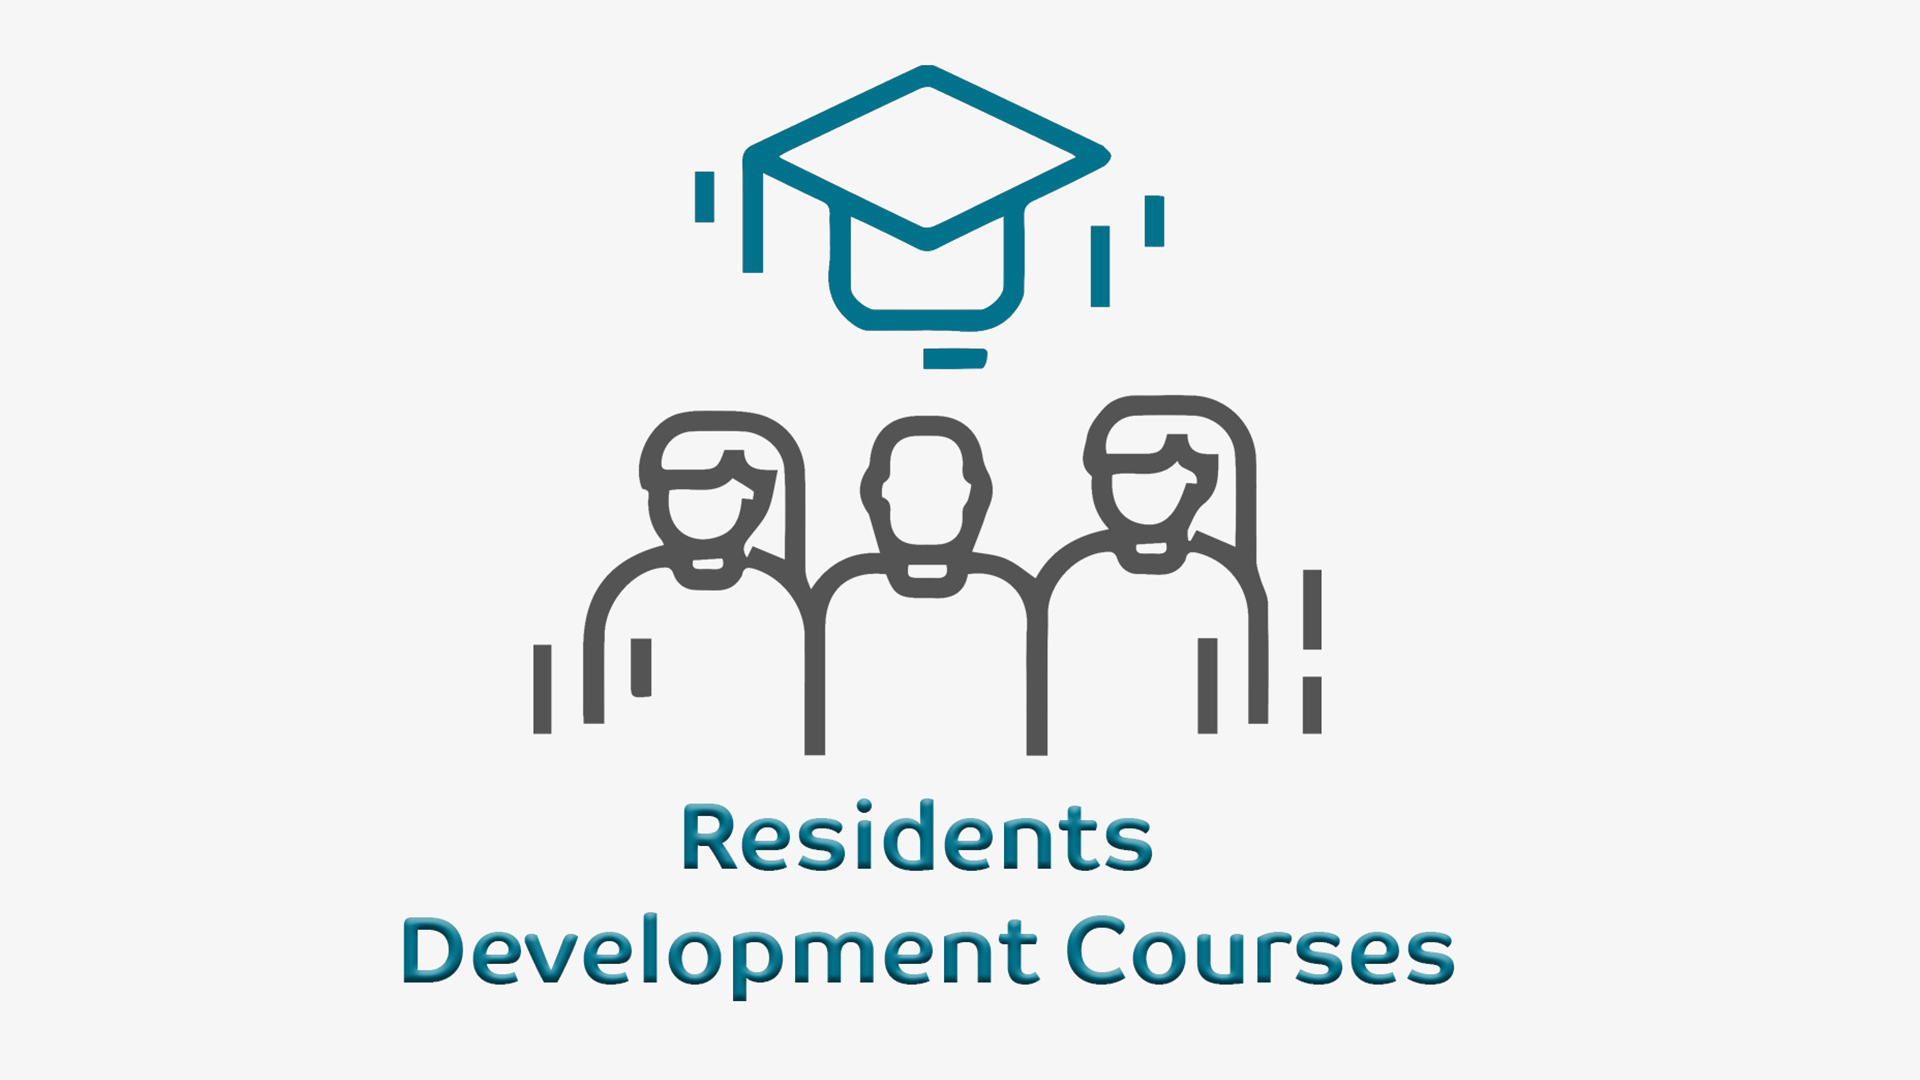 Residents Development Courses